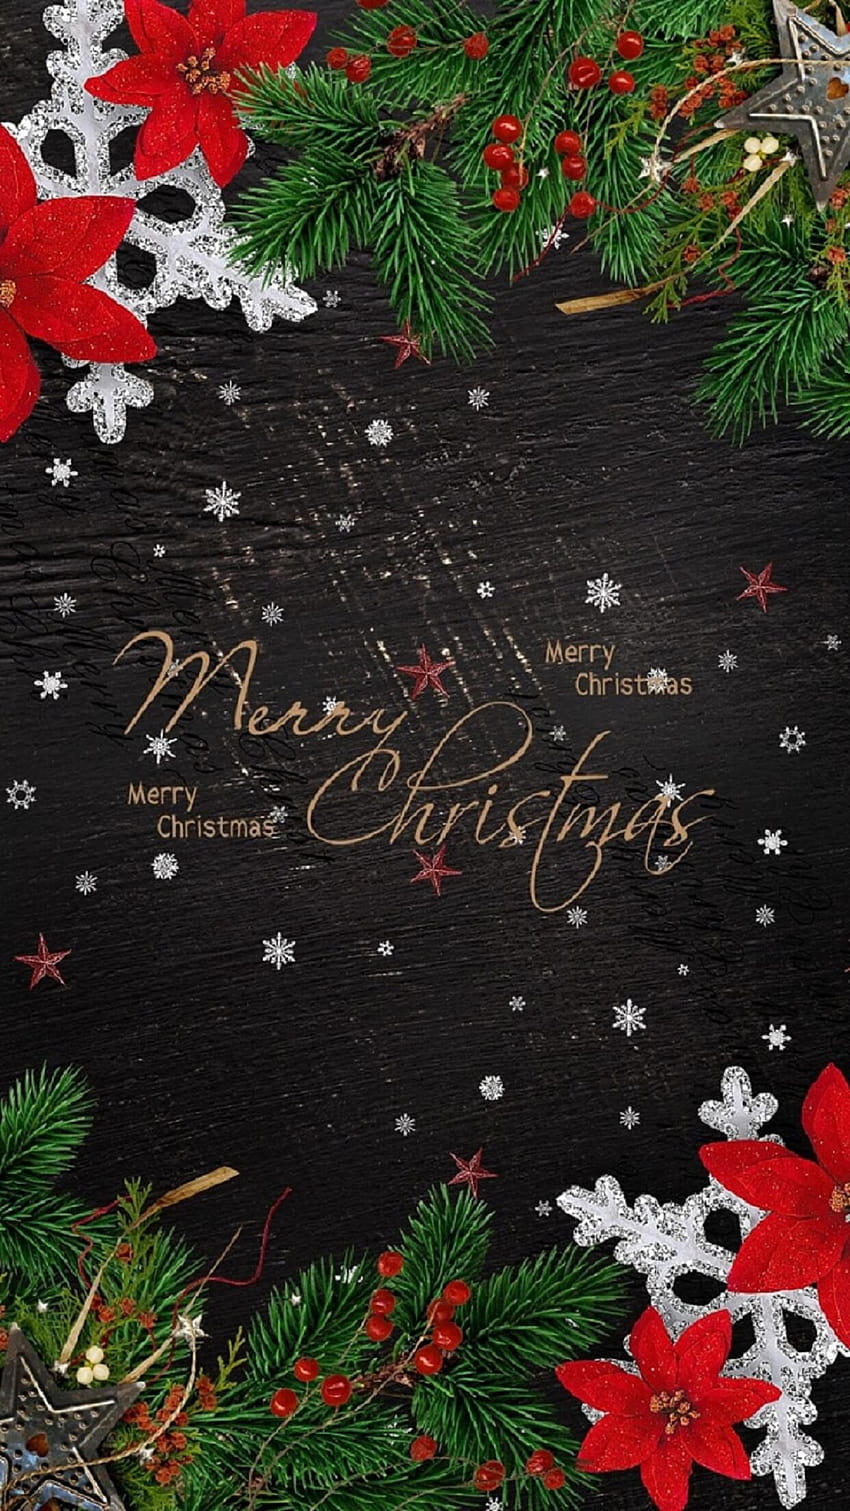 Phone Merry Christmas posted by Ryan Johnson, christmas mobile HD phone wallpaper